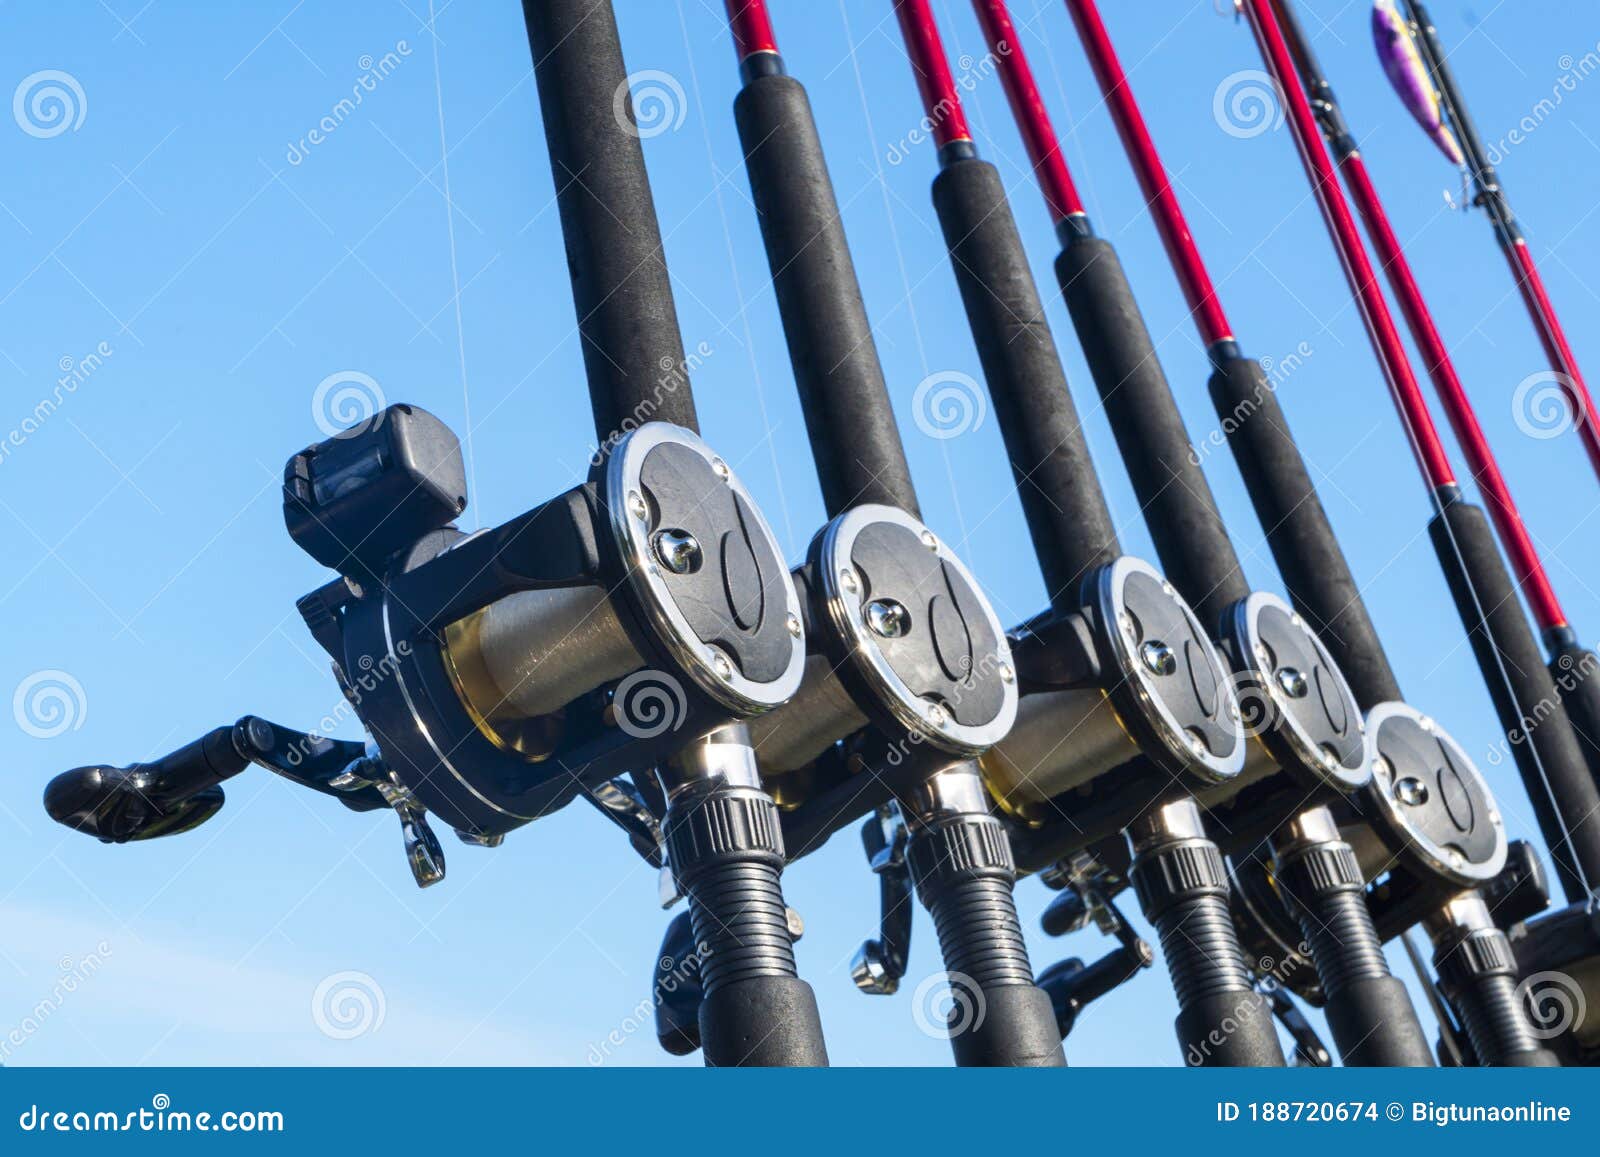 https://thumbs.dreamstime.com/z/fishing-trolling-boat-rods-rod-holder-big-game-reels-pattern-sea-row-188720674.jpg